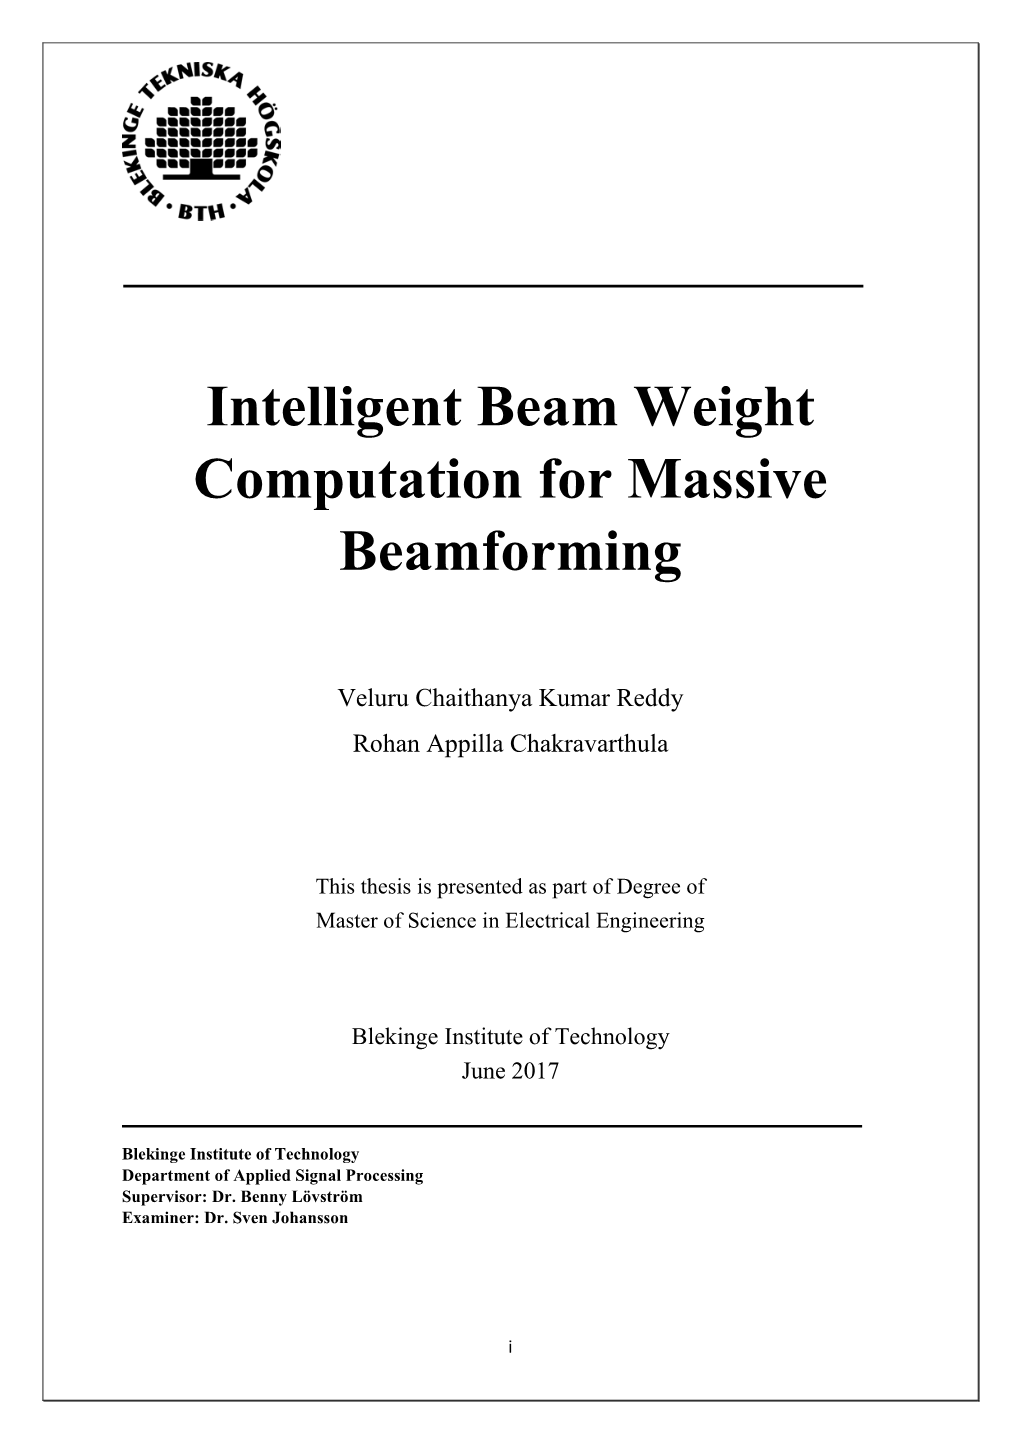 Intelligent Beam Weight Computation for Massive Beamforming